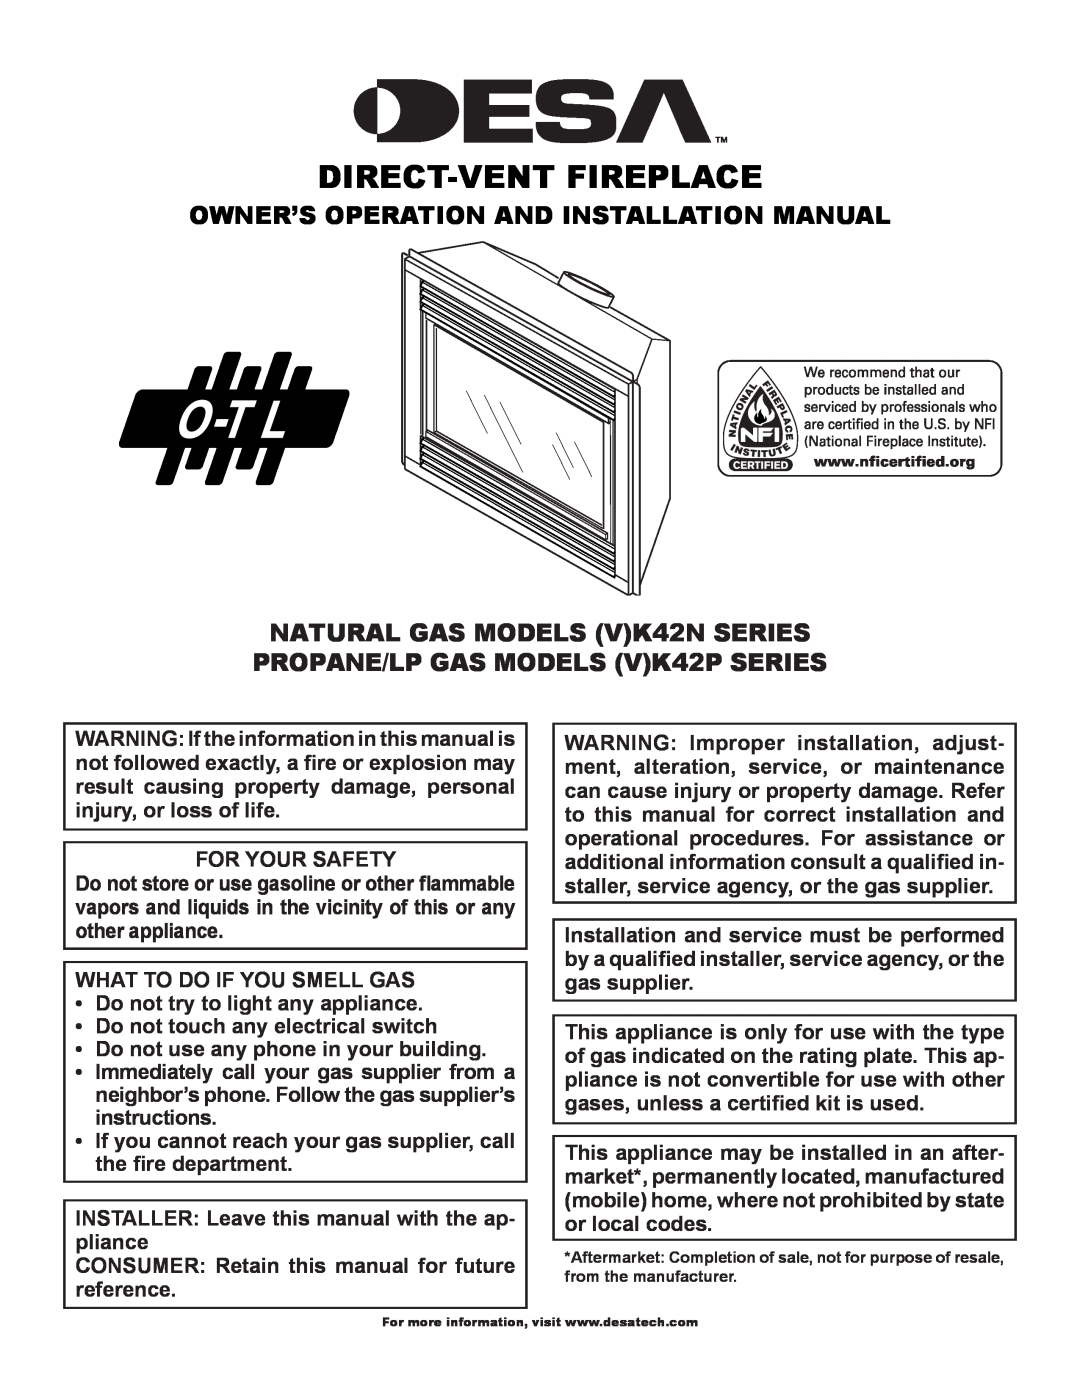 Desa (V)K42P installation manual Owner’S Operation And Installation Manual, For Your Safety, What To Do If You Smell Gas 